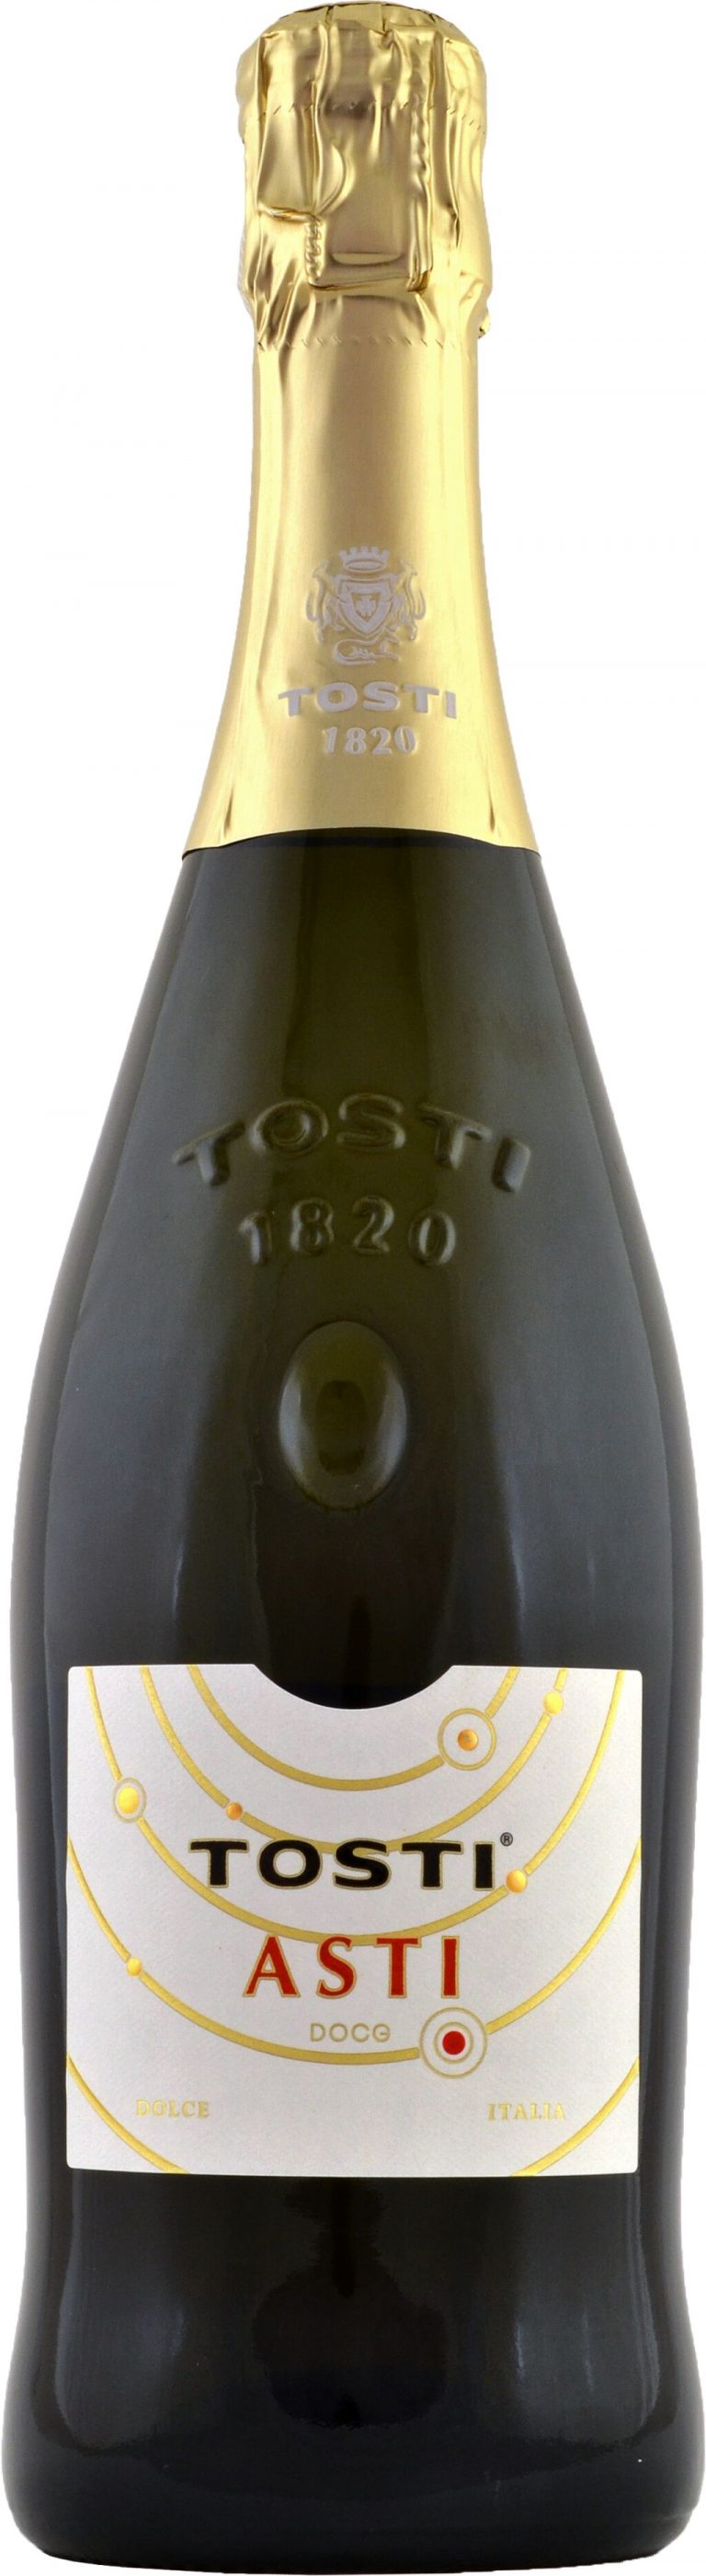 Prosecco tosti. Вино Tosti 1820 Asti. Tosti Asti DOCG Италия Dolce. Tosti 1820 шампанское. Шампанское Асти Дольче тости.